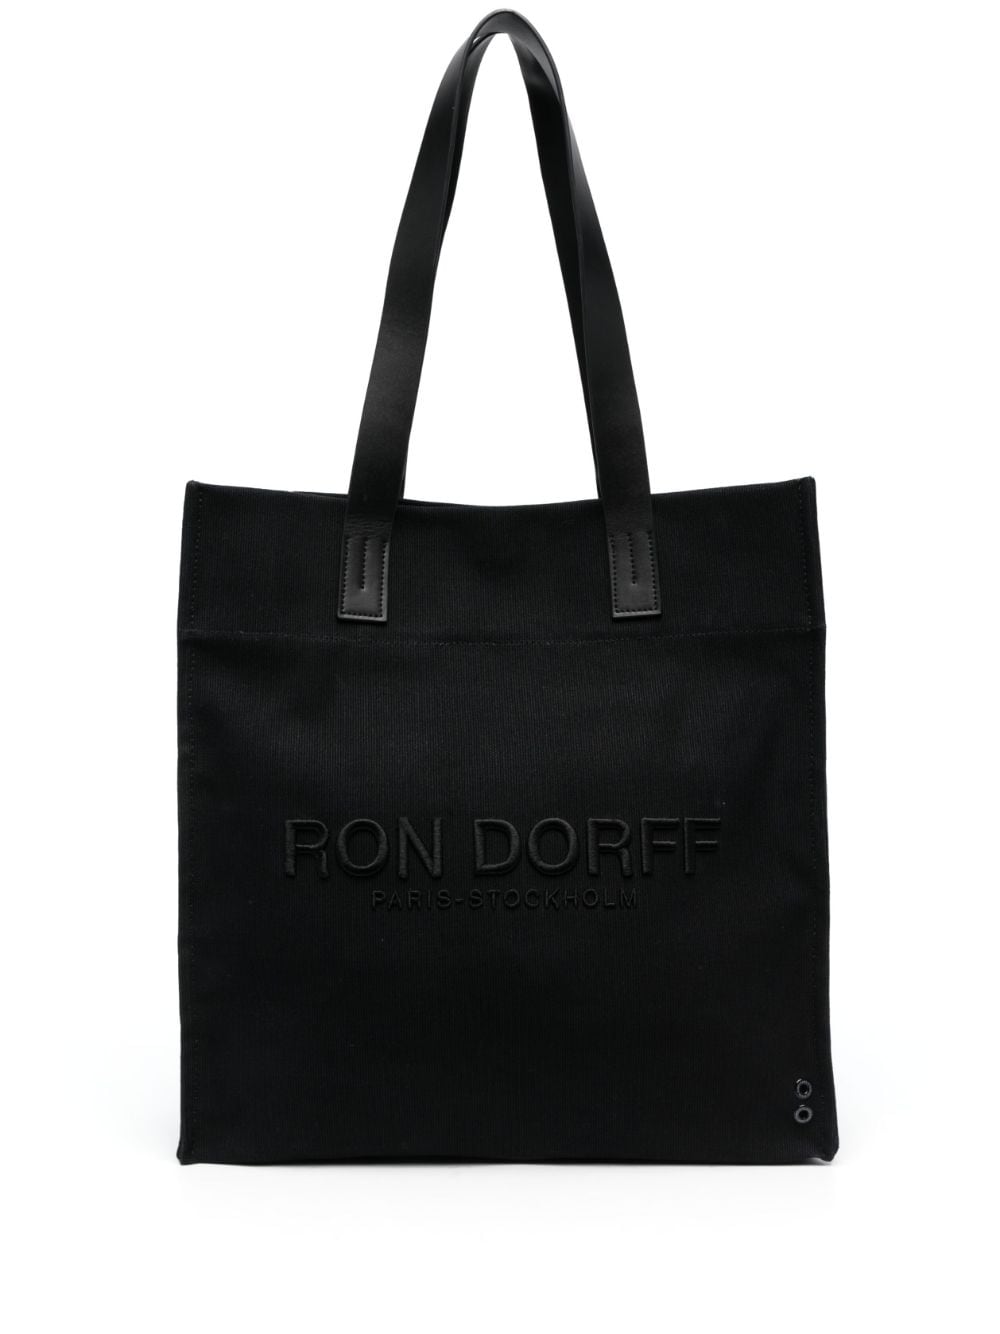 Ron Dorff logo-embroidered Canvas Tote Bag - Farfetch